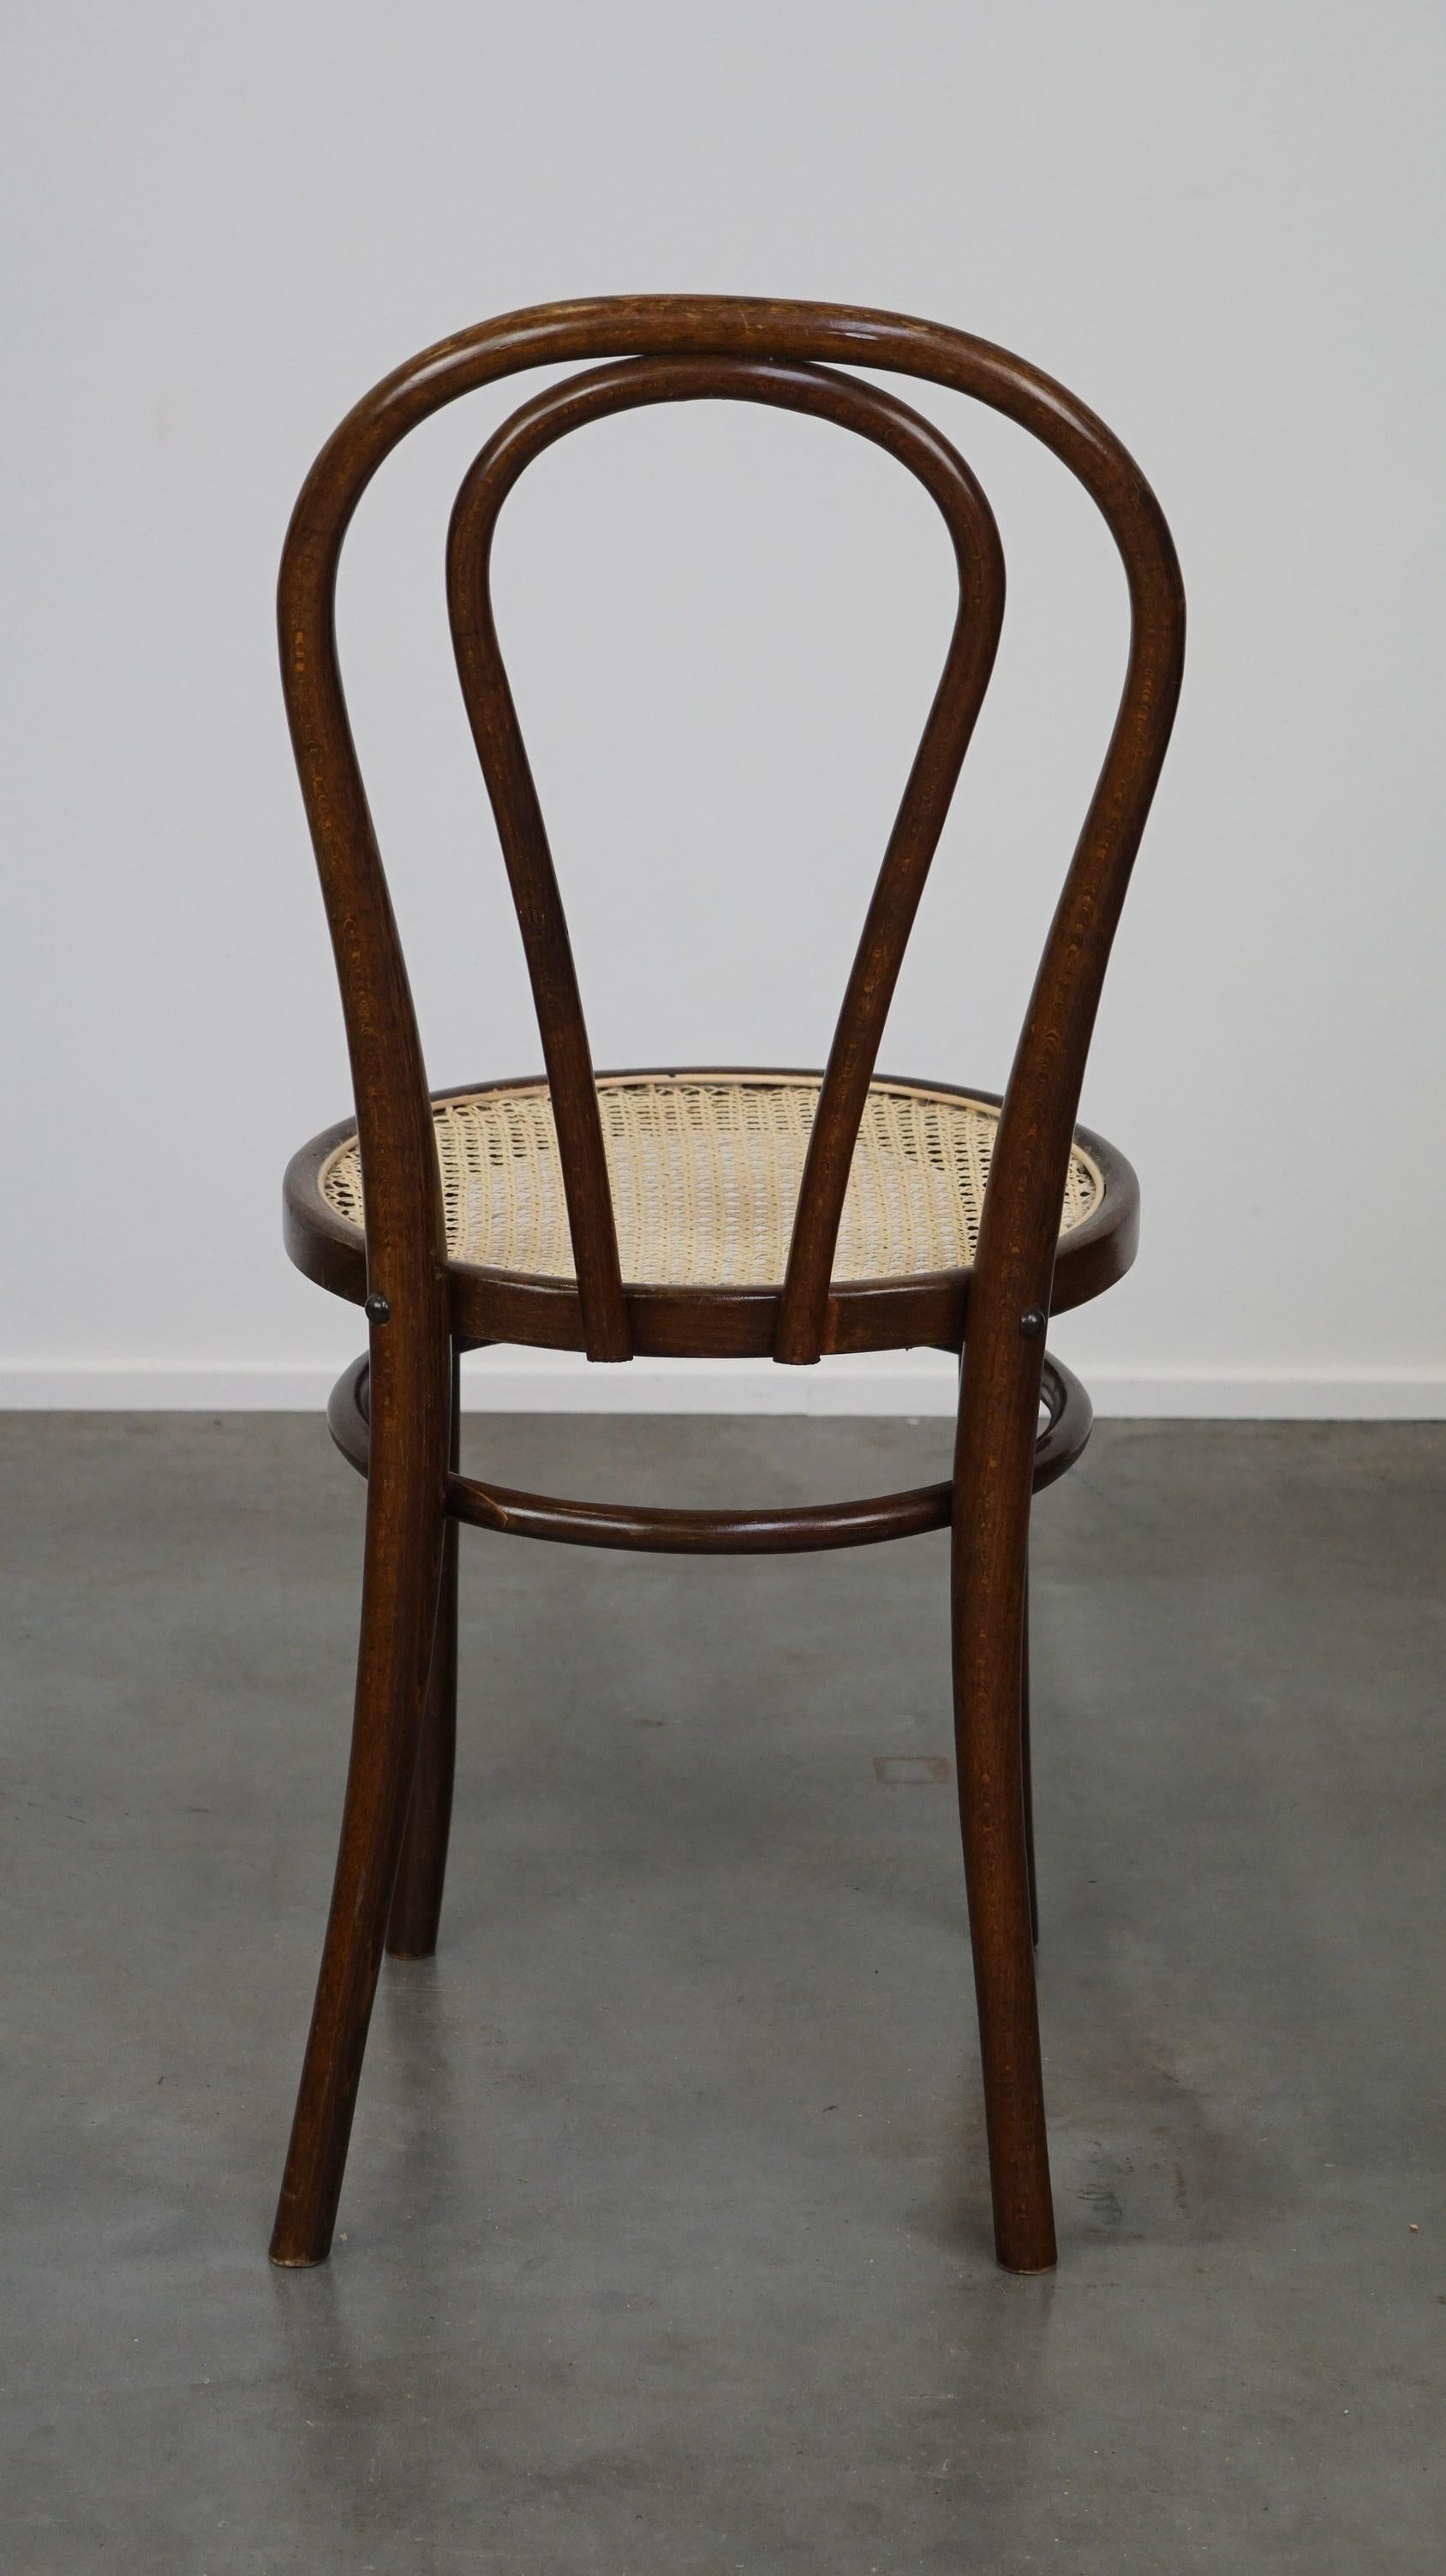 Originaler antiker Thonet-Stuhl aus gebogenem Holz, Modell Nr. 18, mit neuem geflochtenem Sitz (20. Jahrhundert) im Angebot